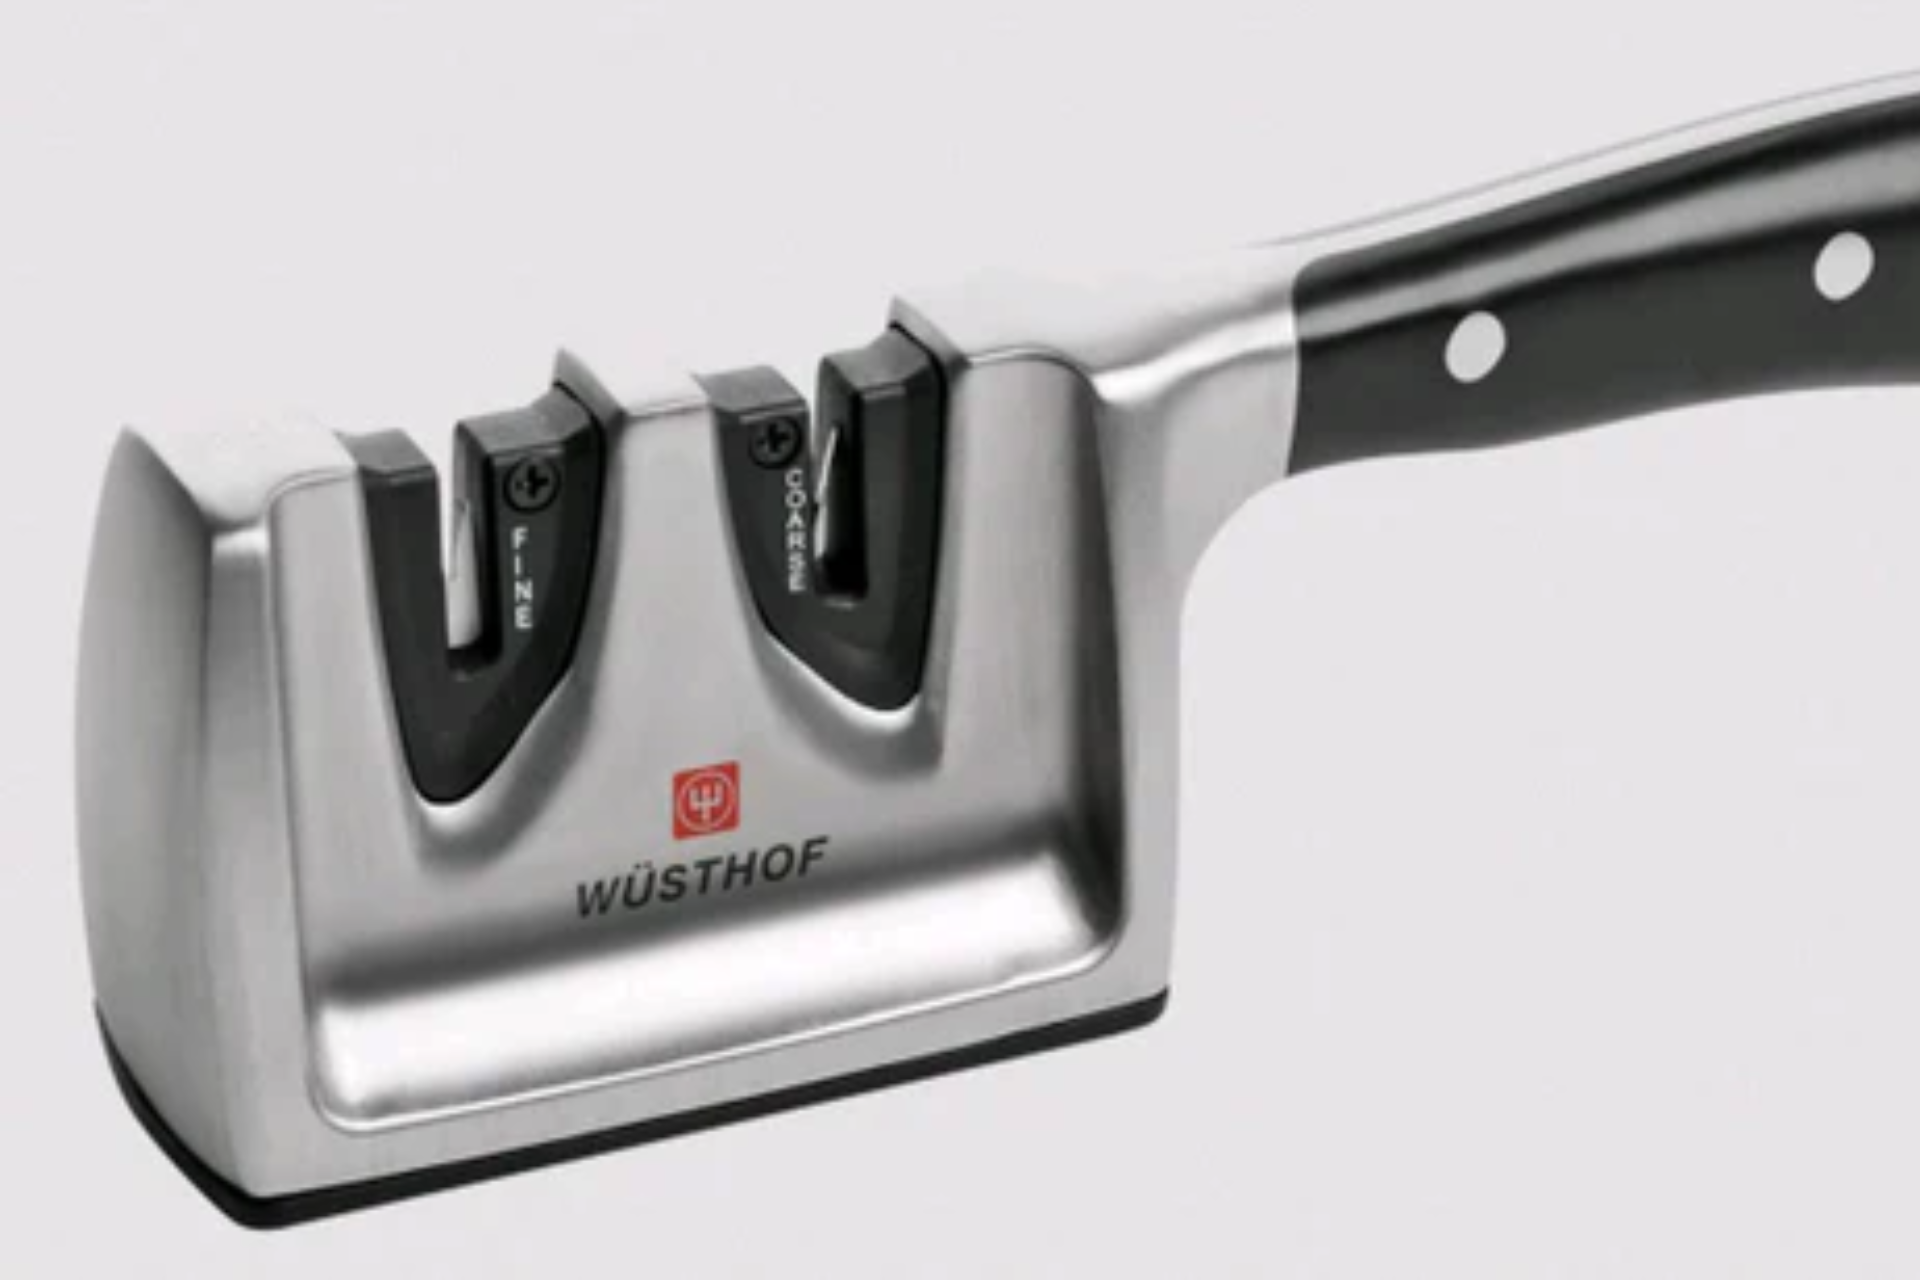 a Wusthof manual knife sharpener